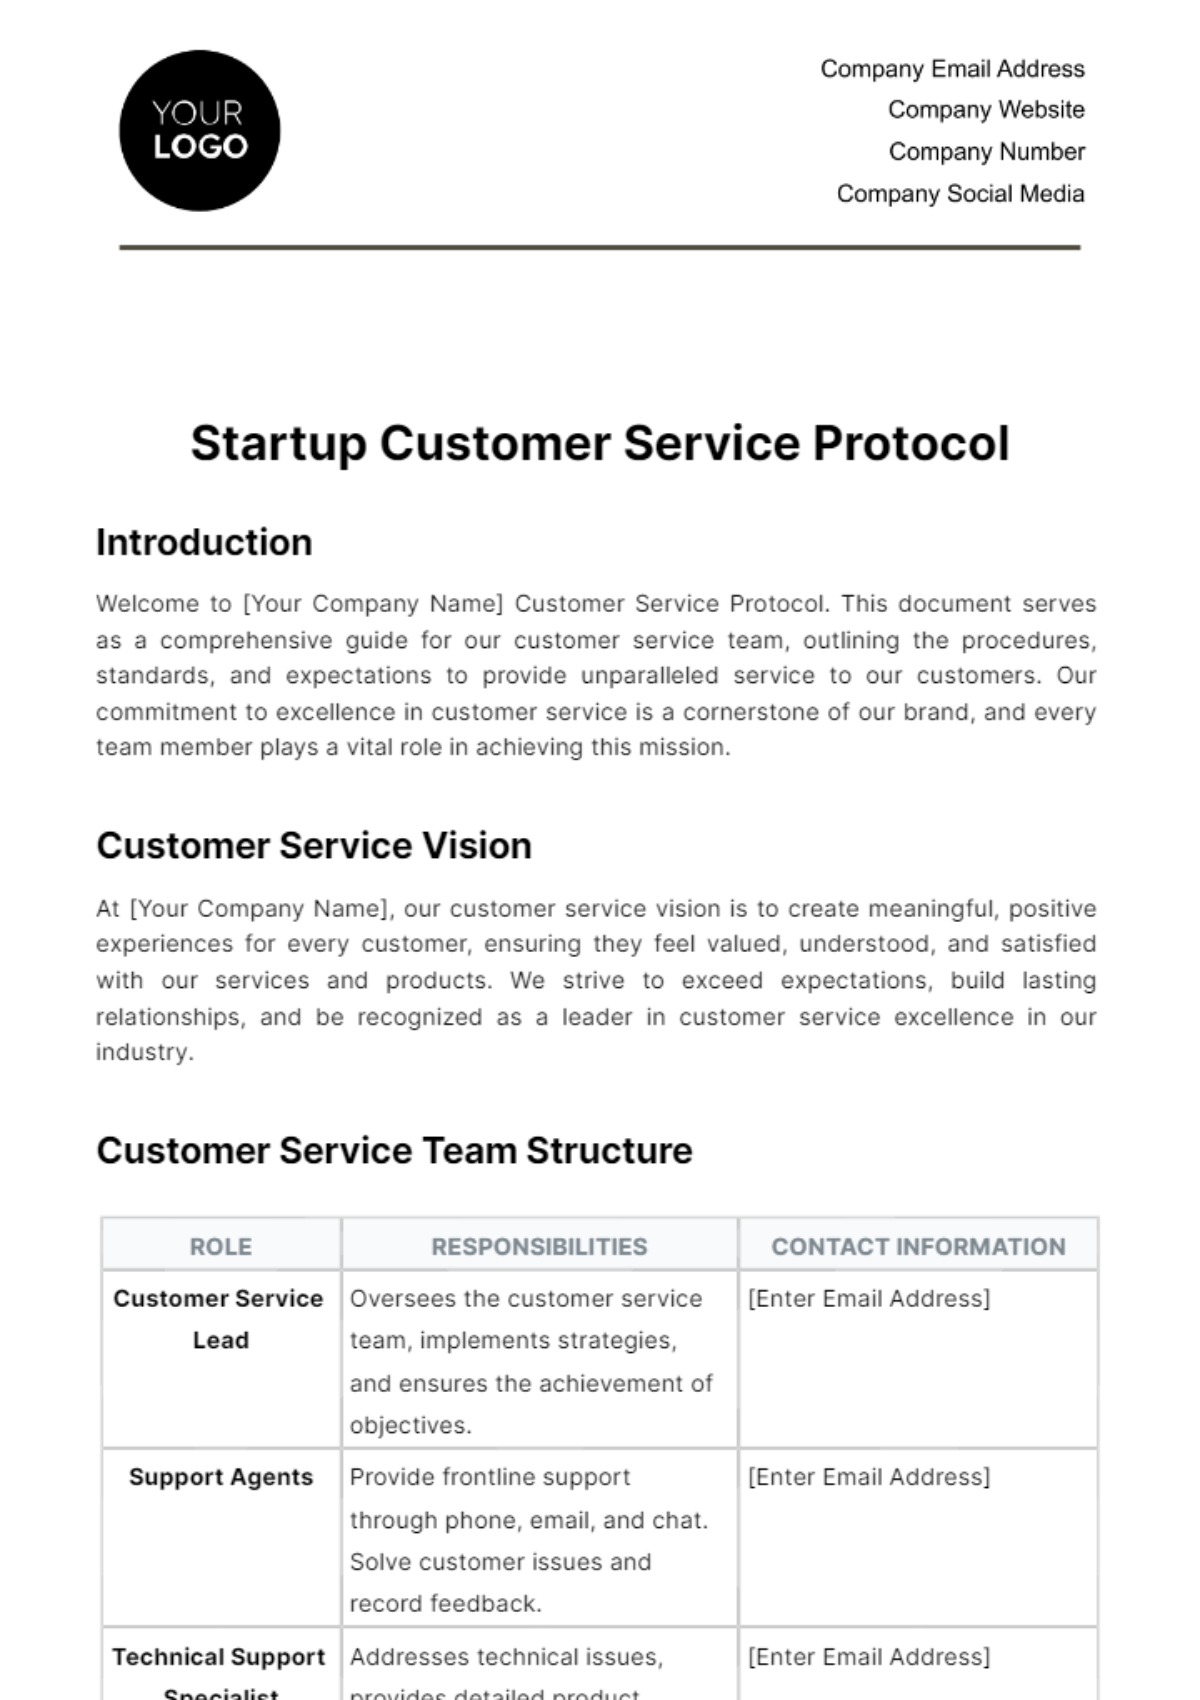 Free Startup Customer Service Protocol Template